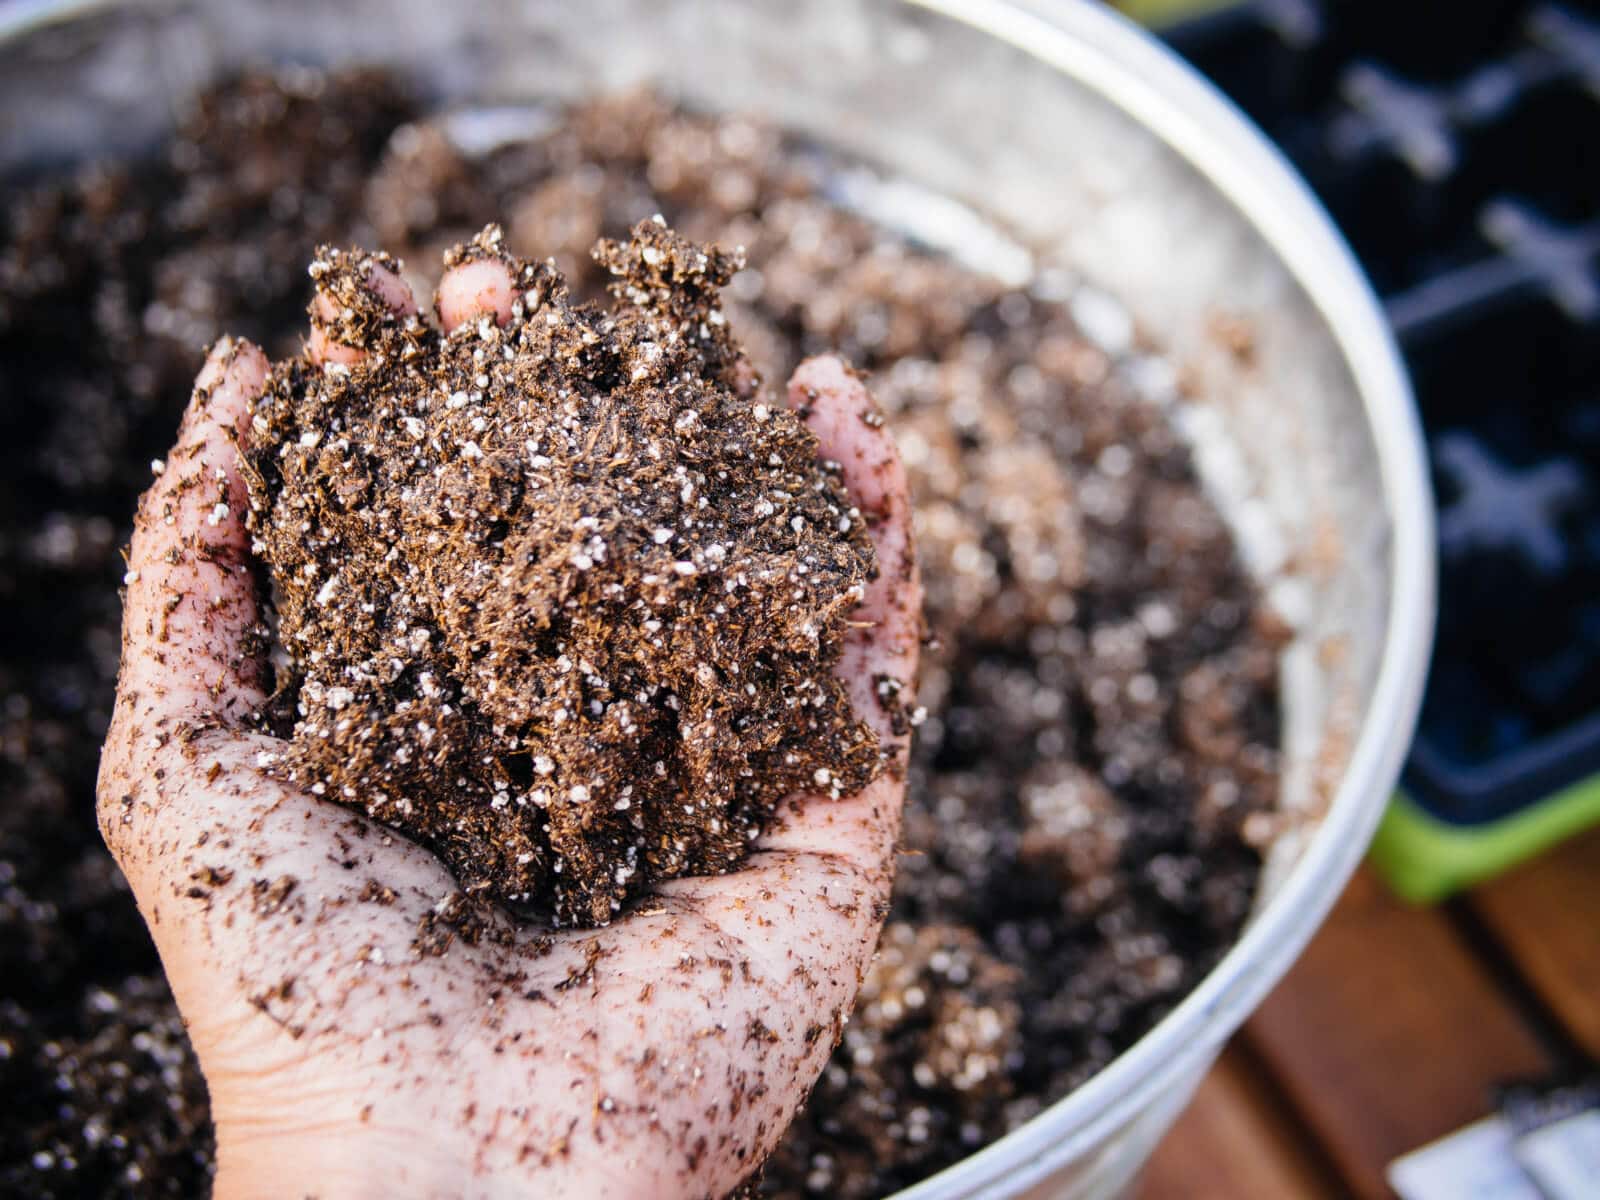 Perlite loosens soil mixes for seed starting